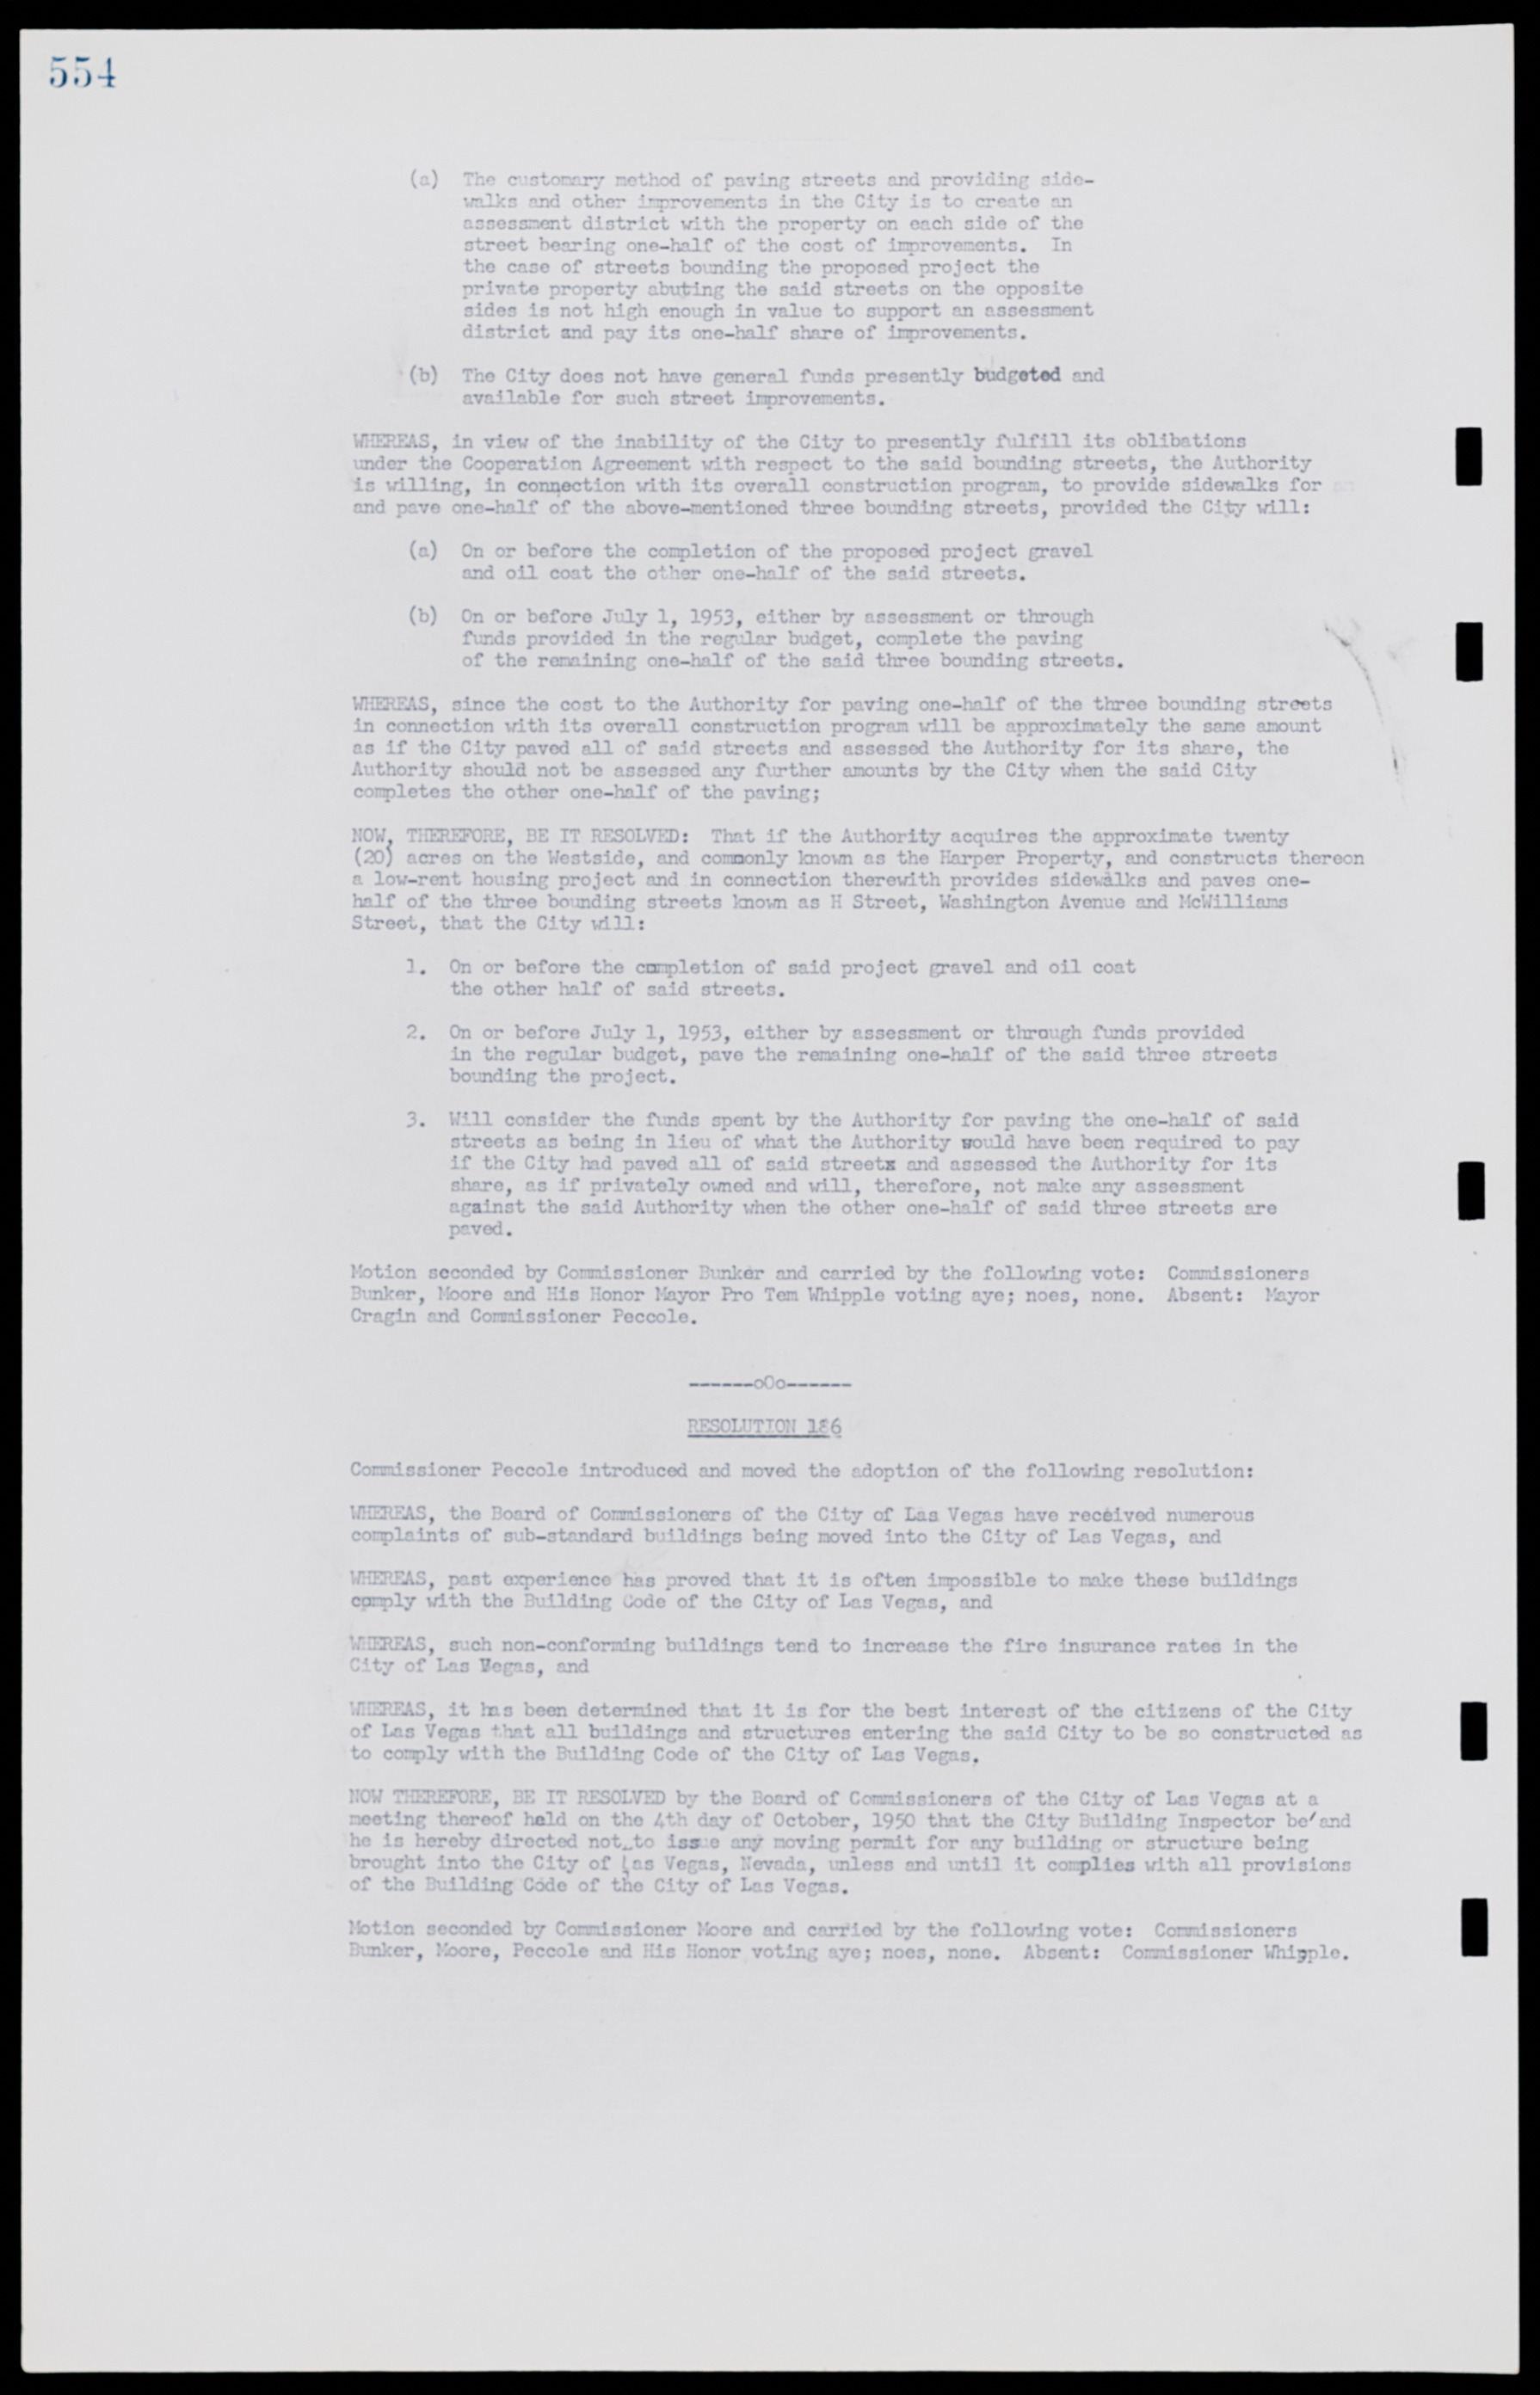 Las Vegas City Commission Minutes, January 7, 1947 to October 26, 1949, lvc000006-584